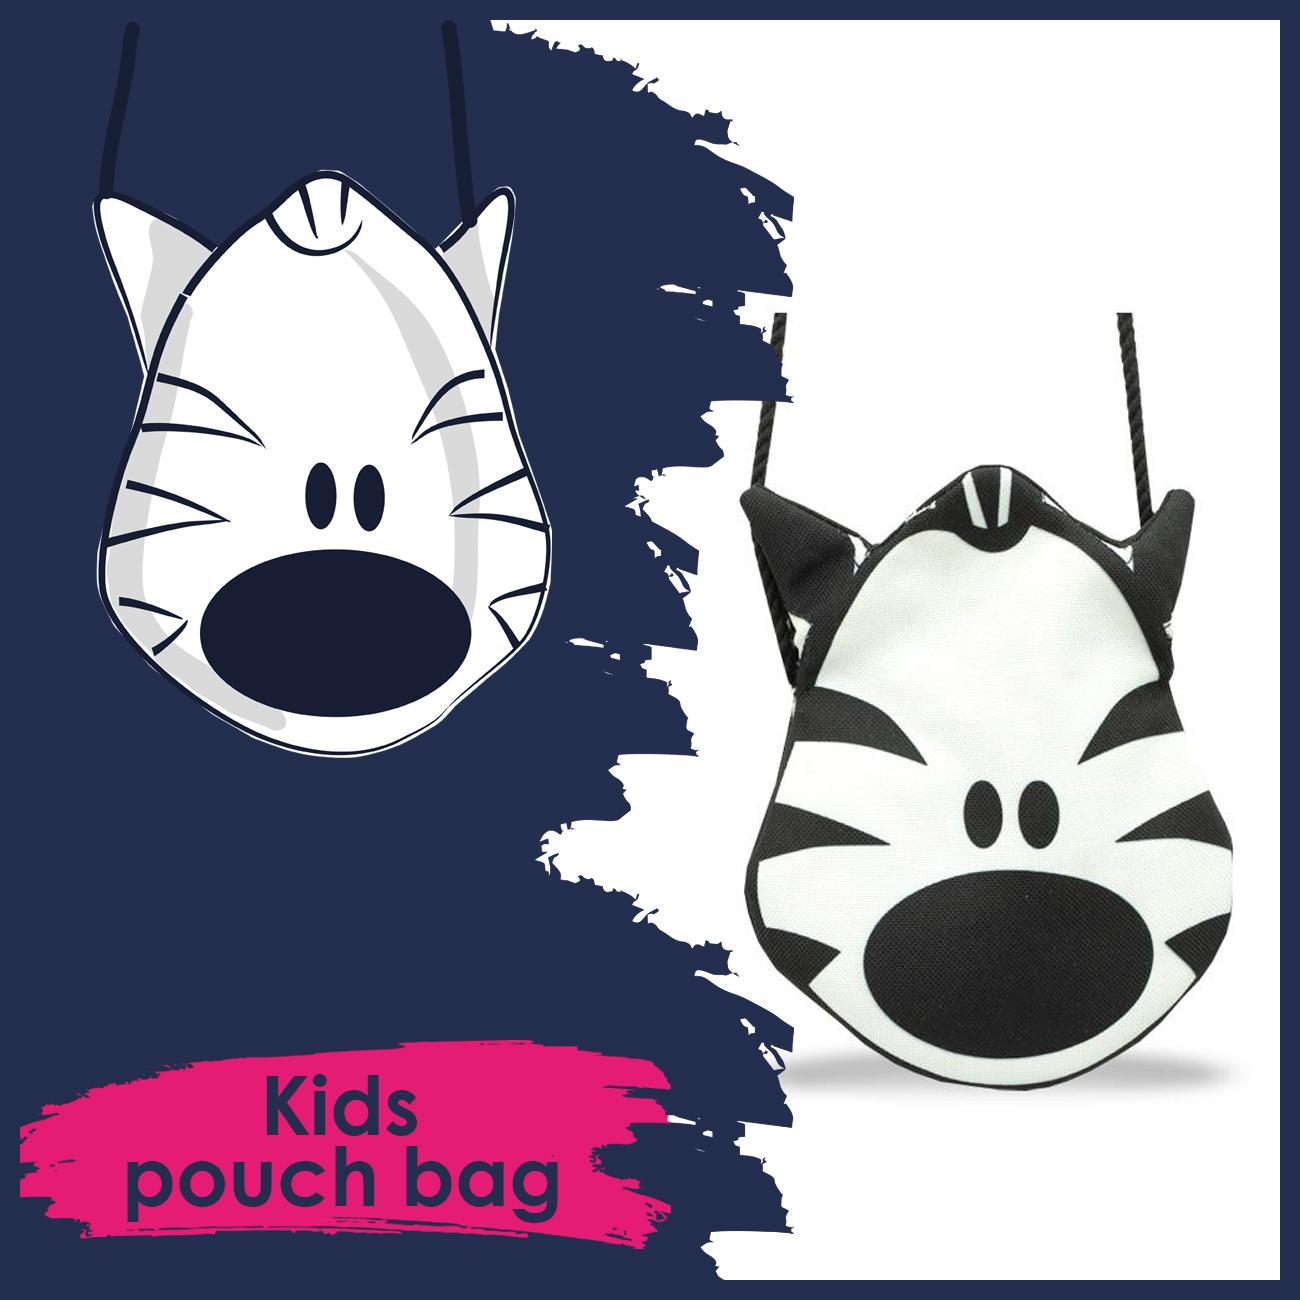 Kids pouch bag